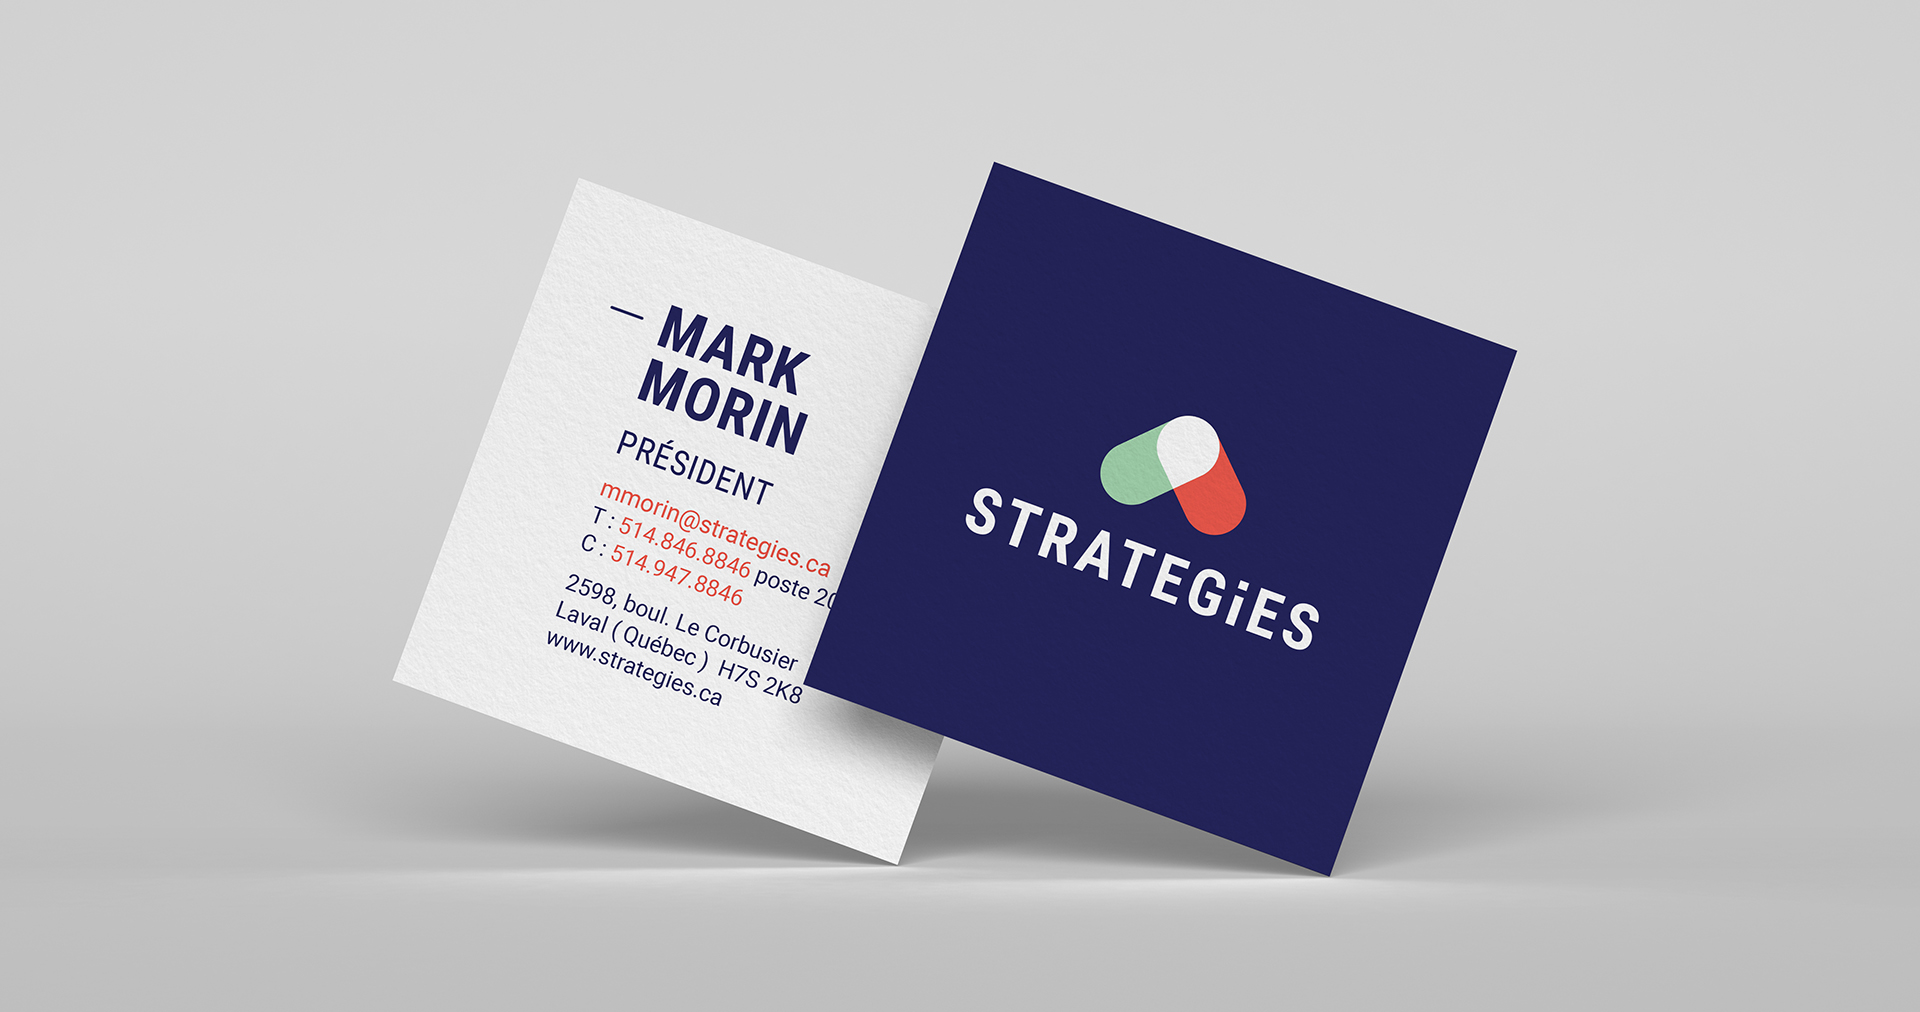 Strategies business card